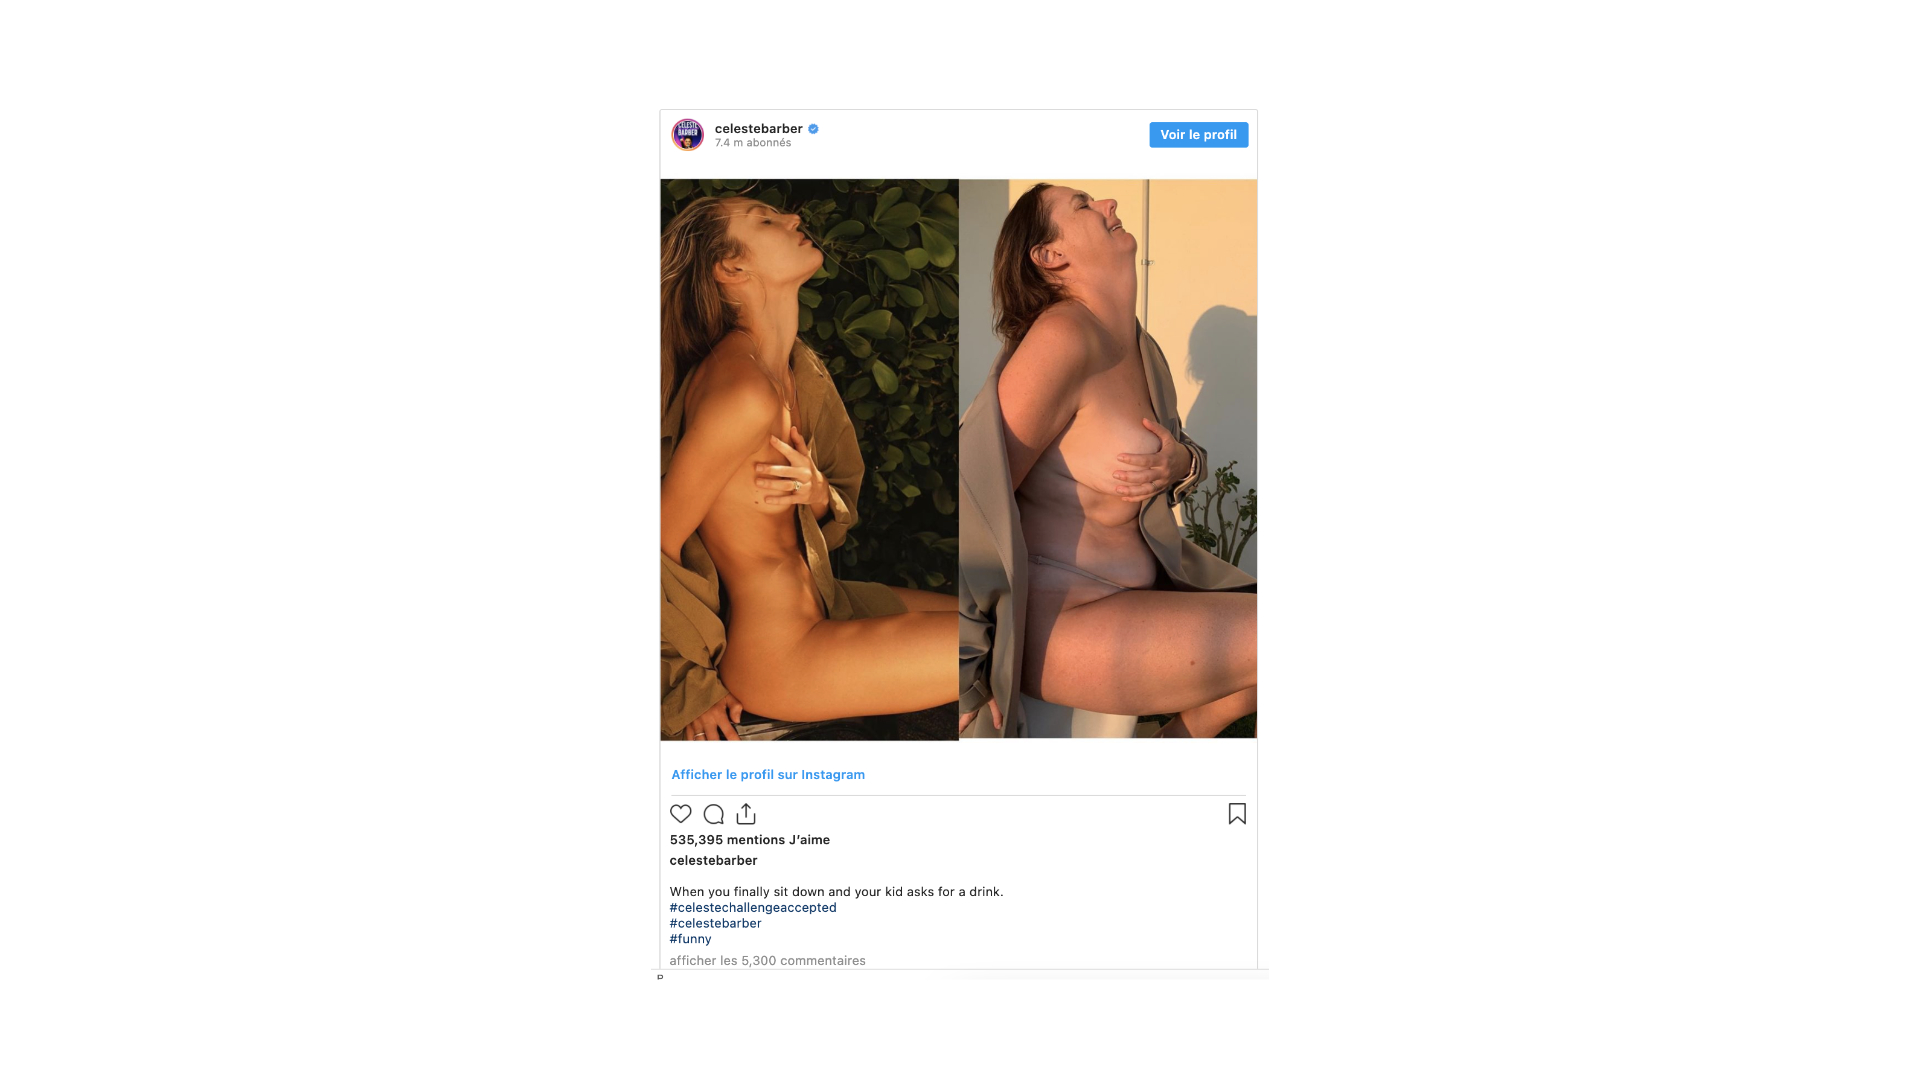 Instagram continue de censurer des photos de femmes